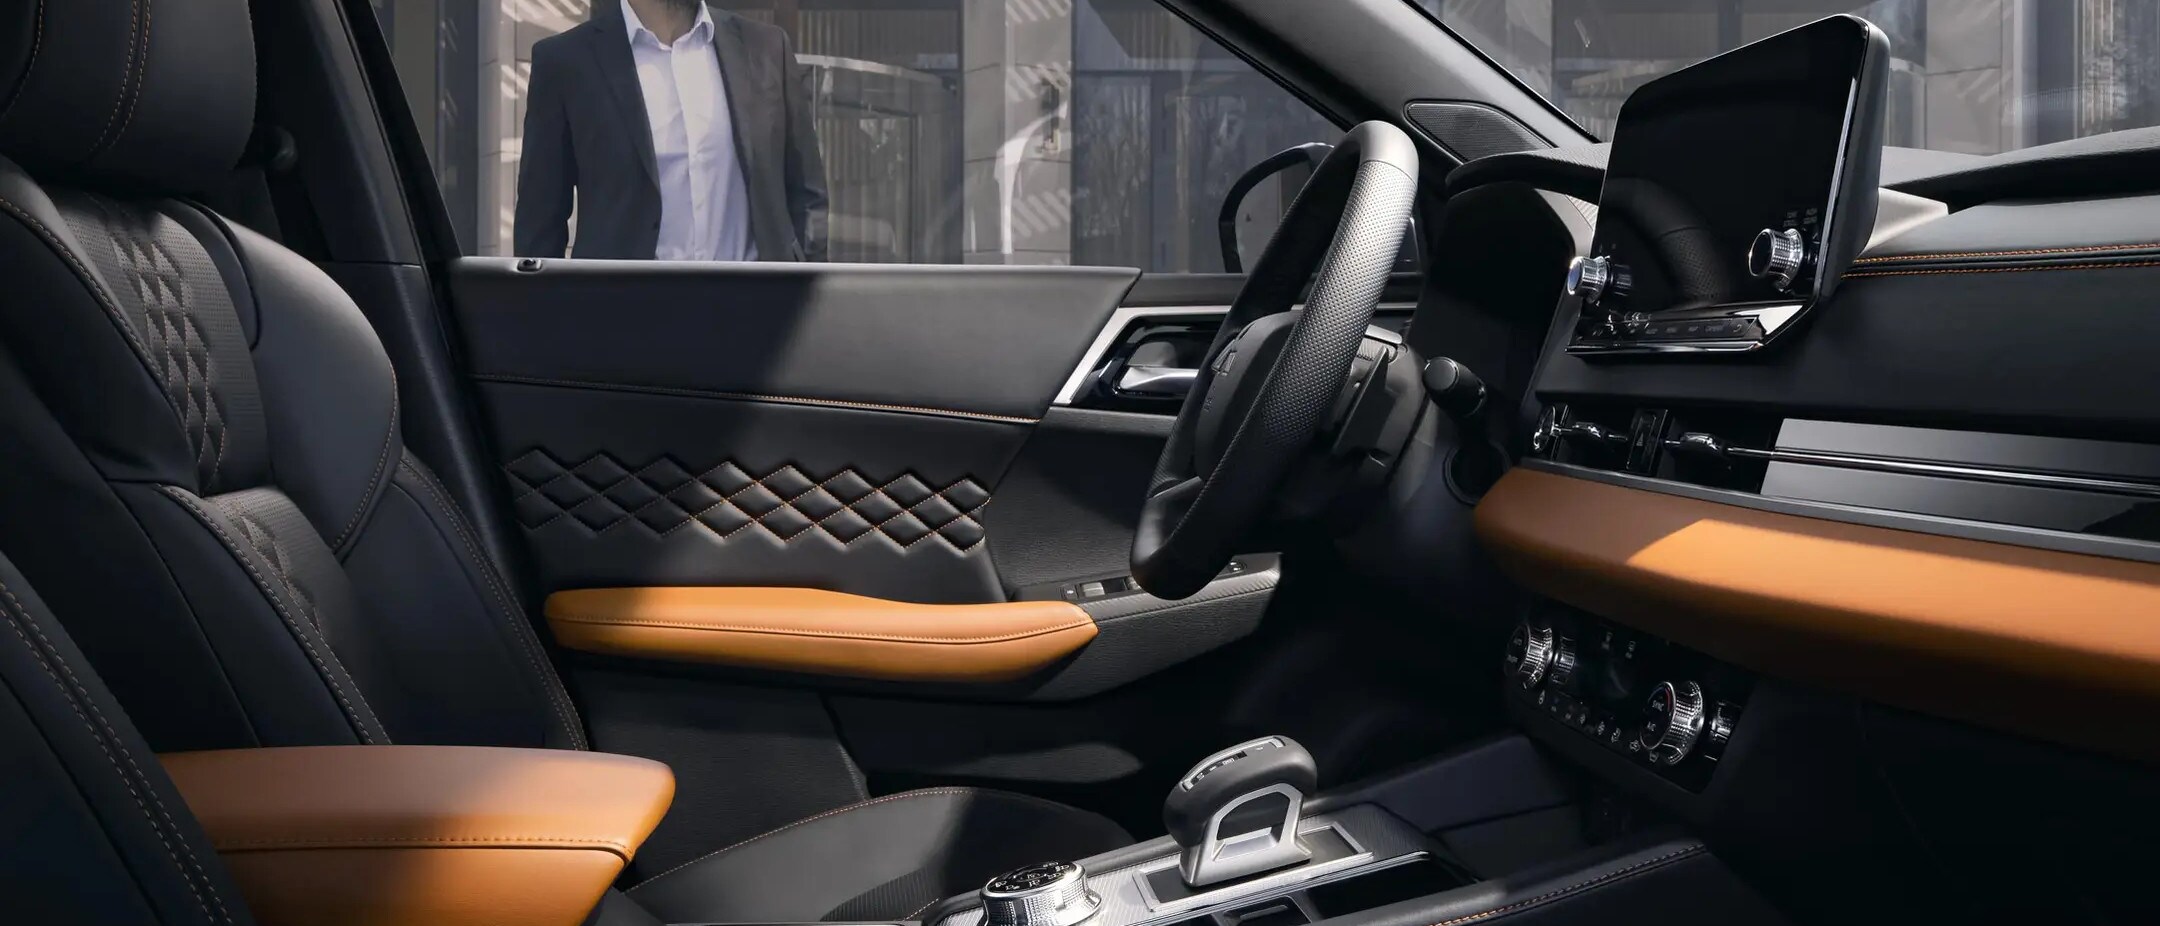 2023 Mitsubishi Outlander Interior Features